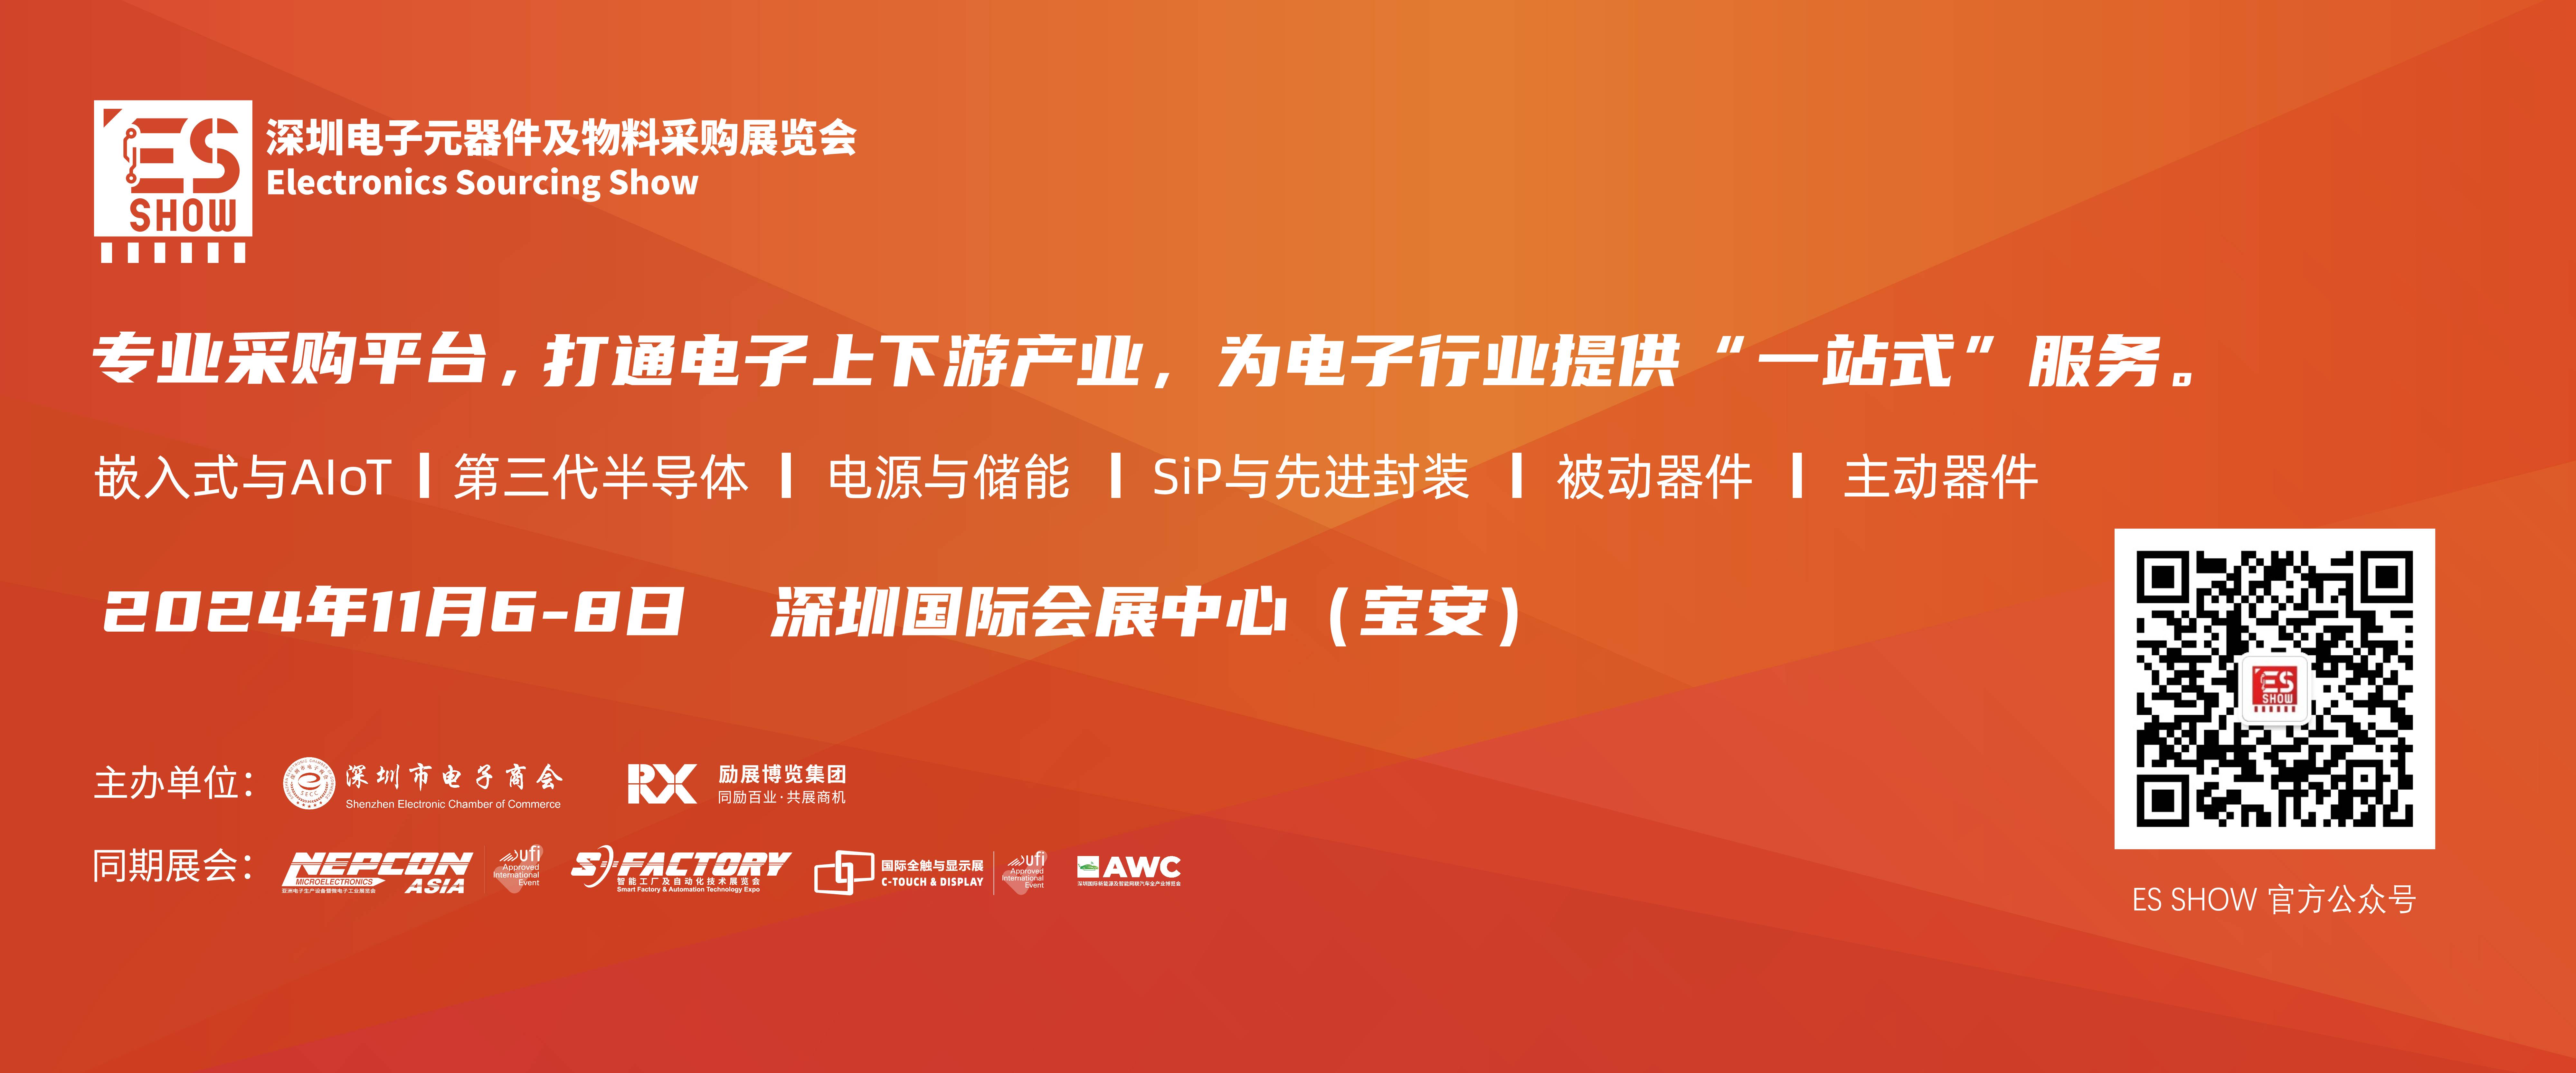 HMD 芯片 深圳电子展 华南电子展 中国电子展